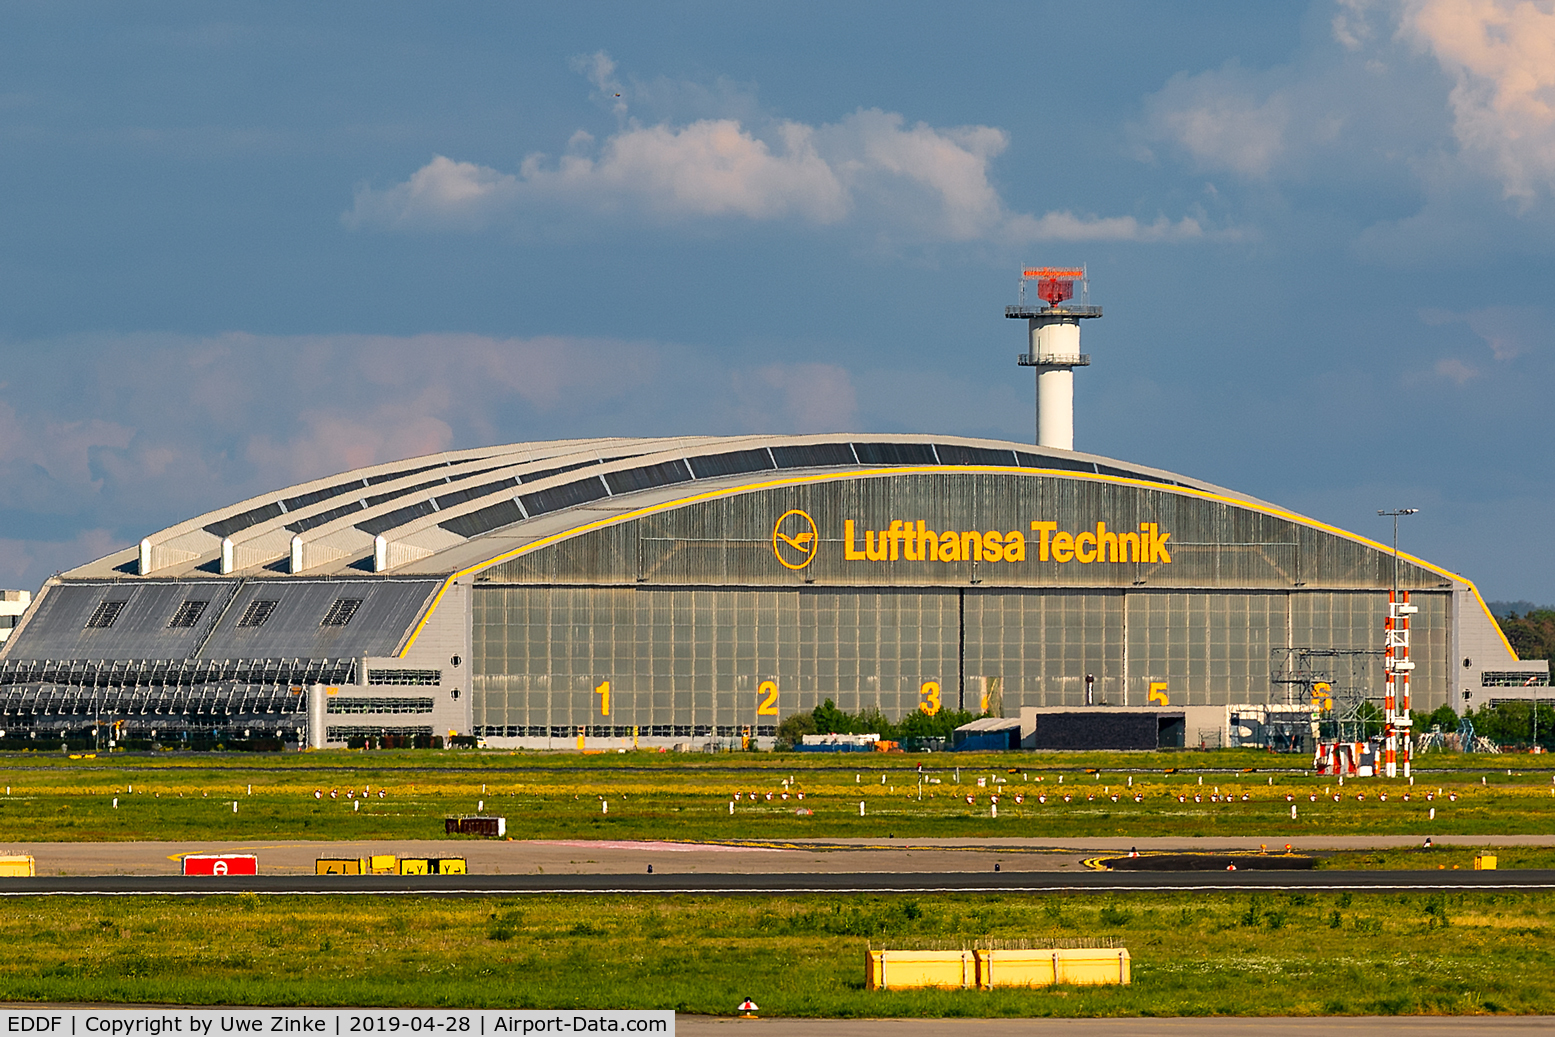 Frankfurt International Airport, Frankfurt am Main Germany (EDDF) - The Lufthansa maintenance building is on the south side of the airport